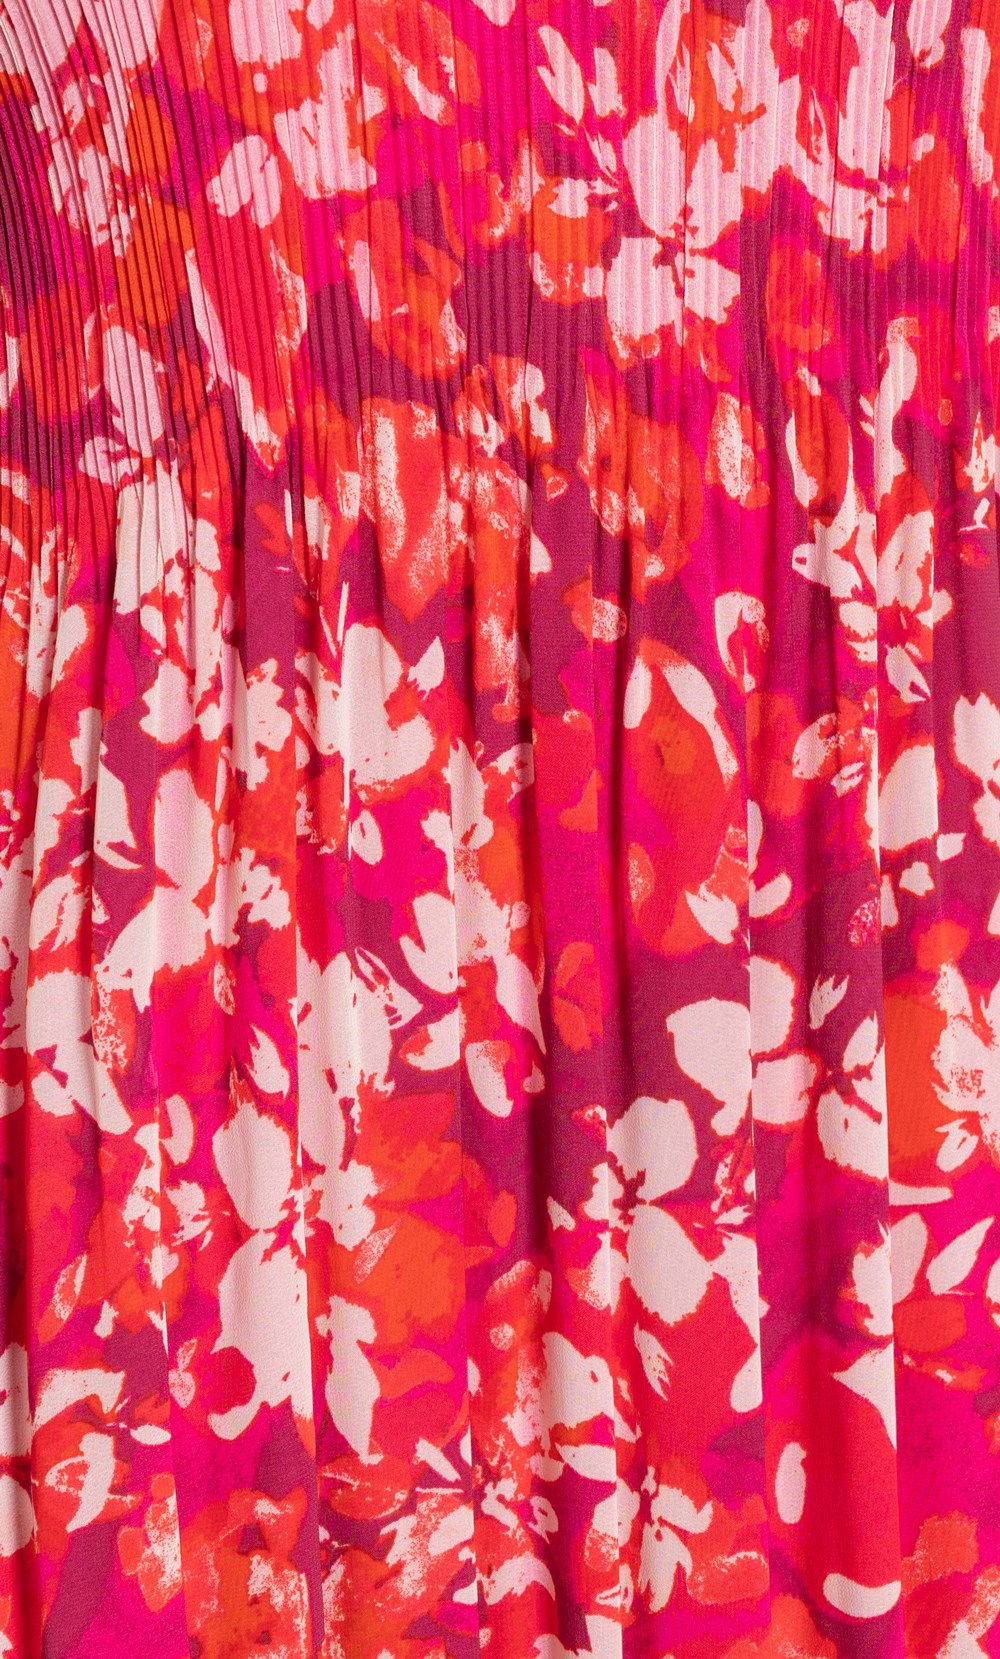 Pleated Floral Print Dress